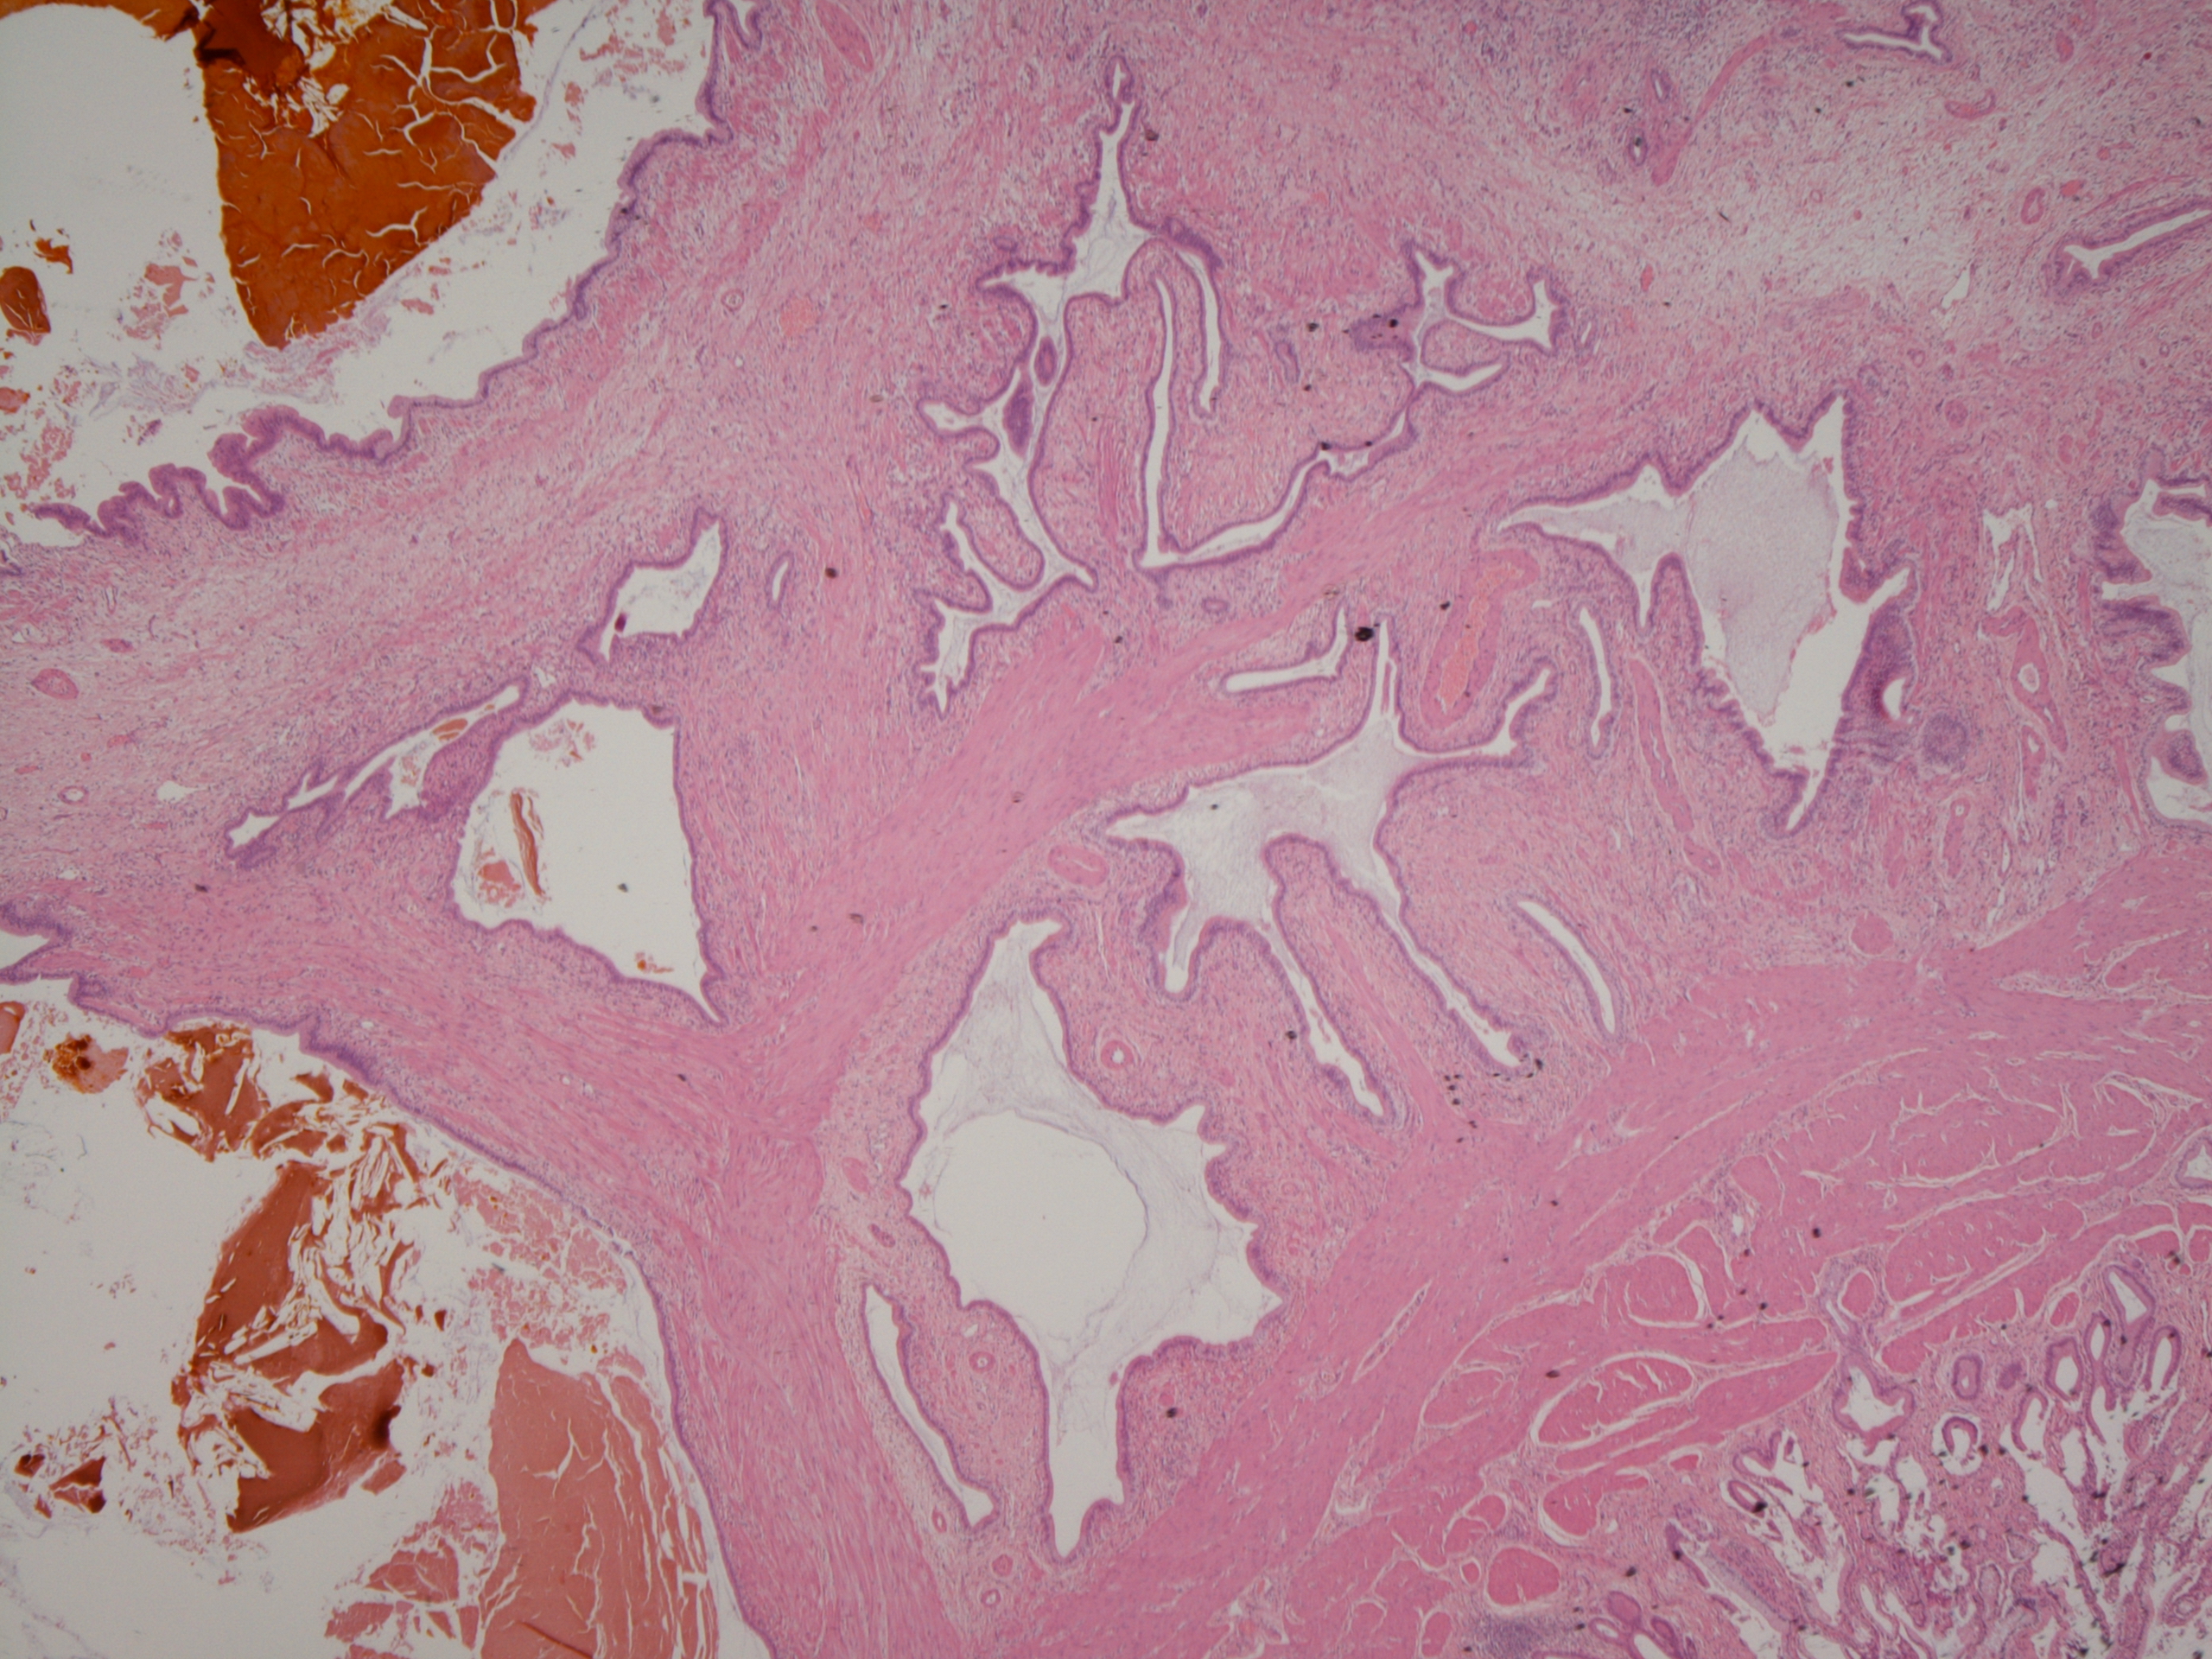 A microscopic image of an adenomyoma